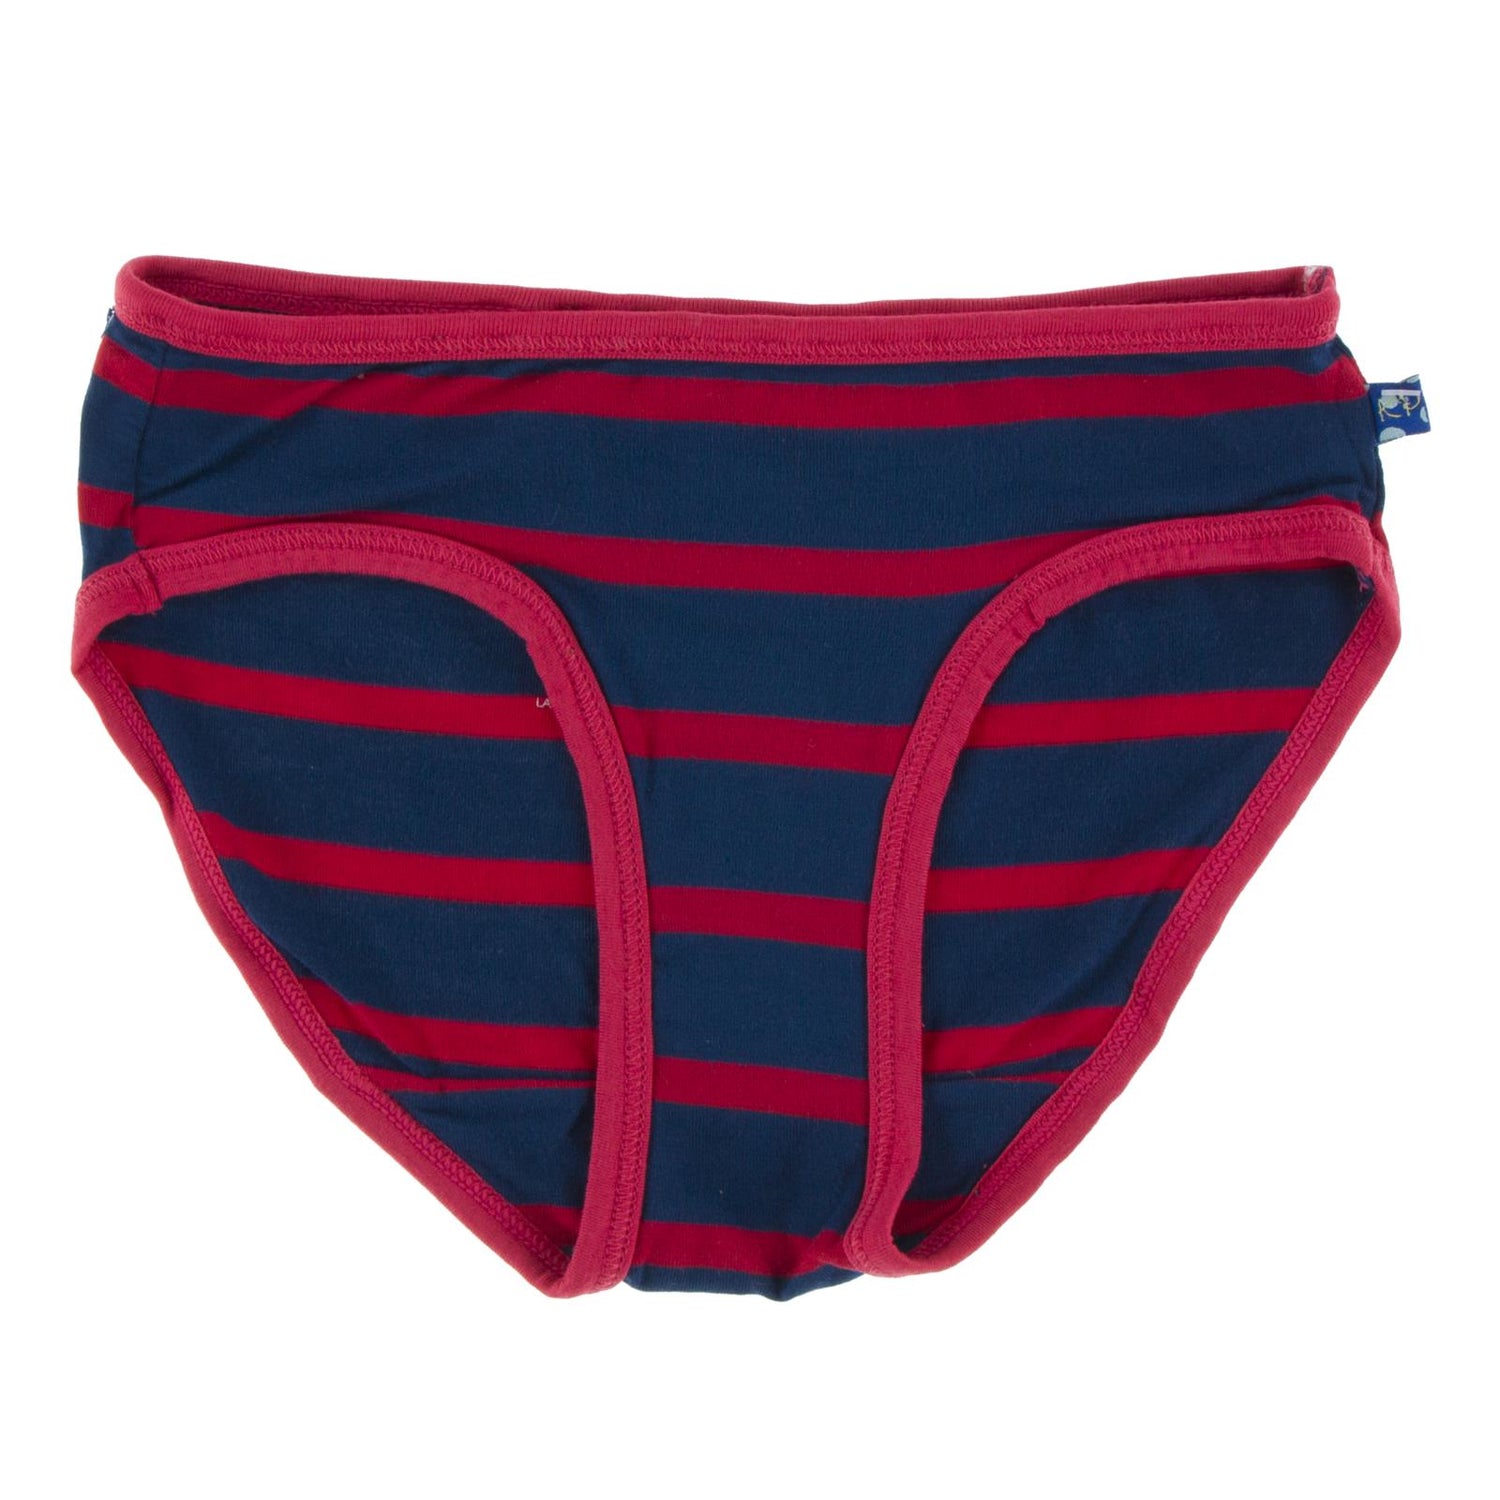 Print Underwear in Everyday Heros Navy Stripe with Flag Red Trim